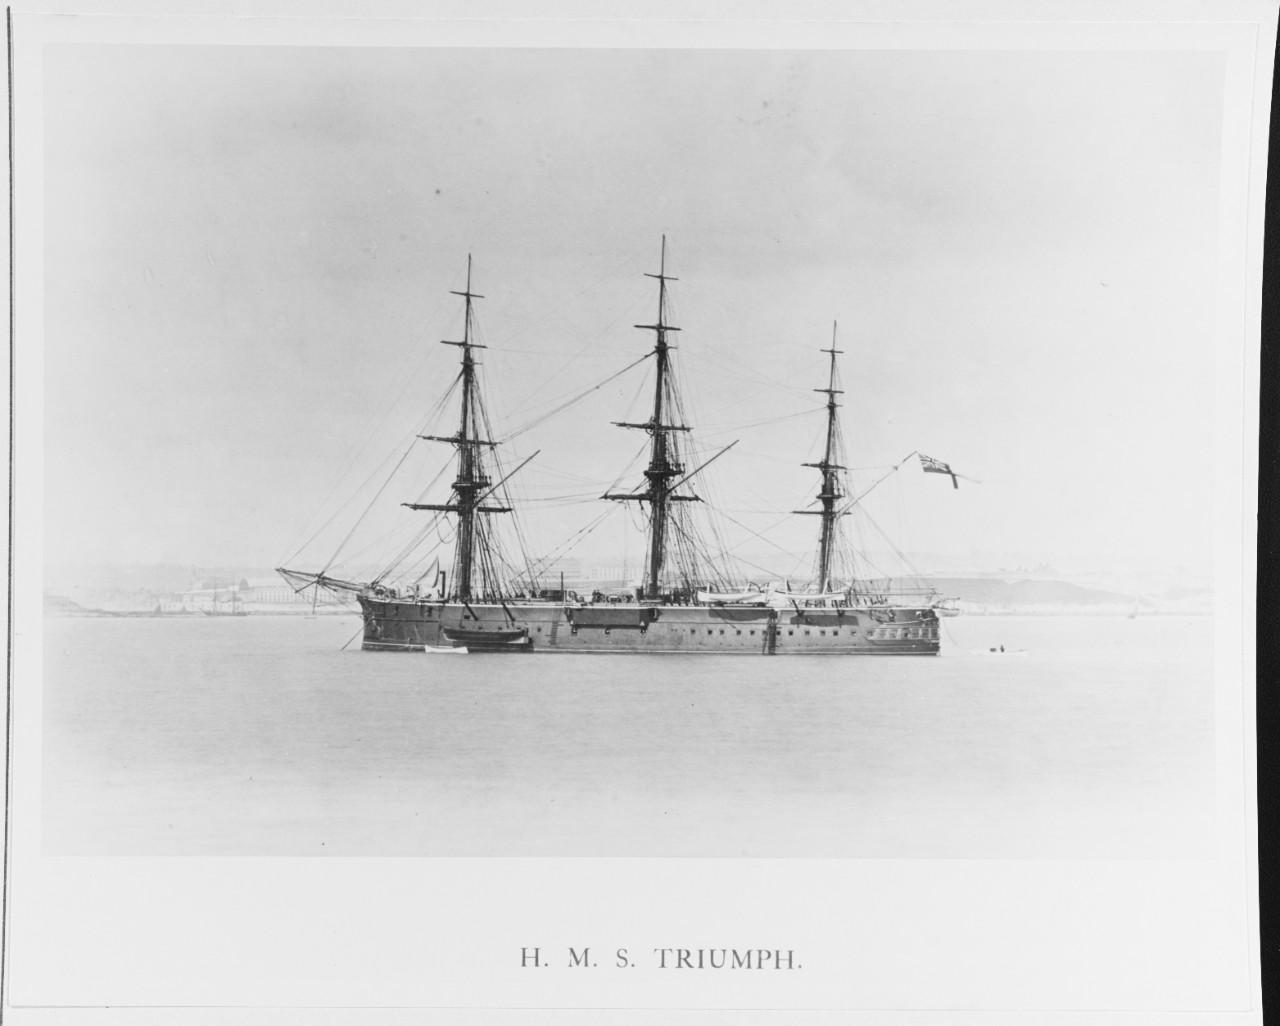 HMS TRIUMPH (BRITISH BATTLESHIP, 1870)